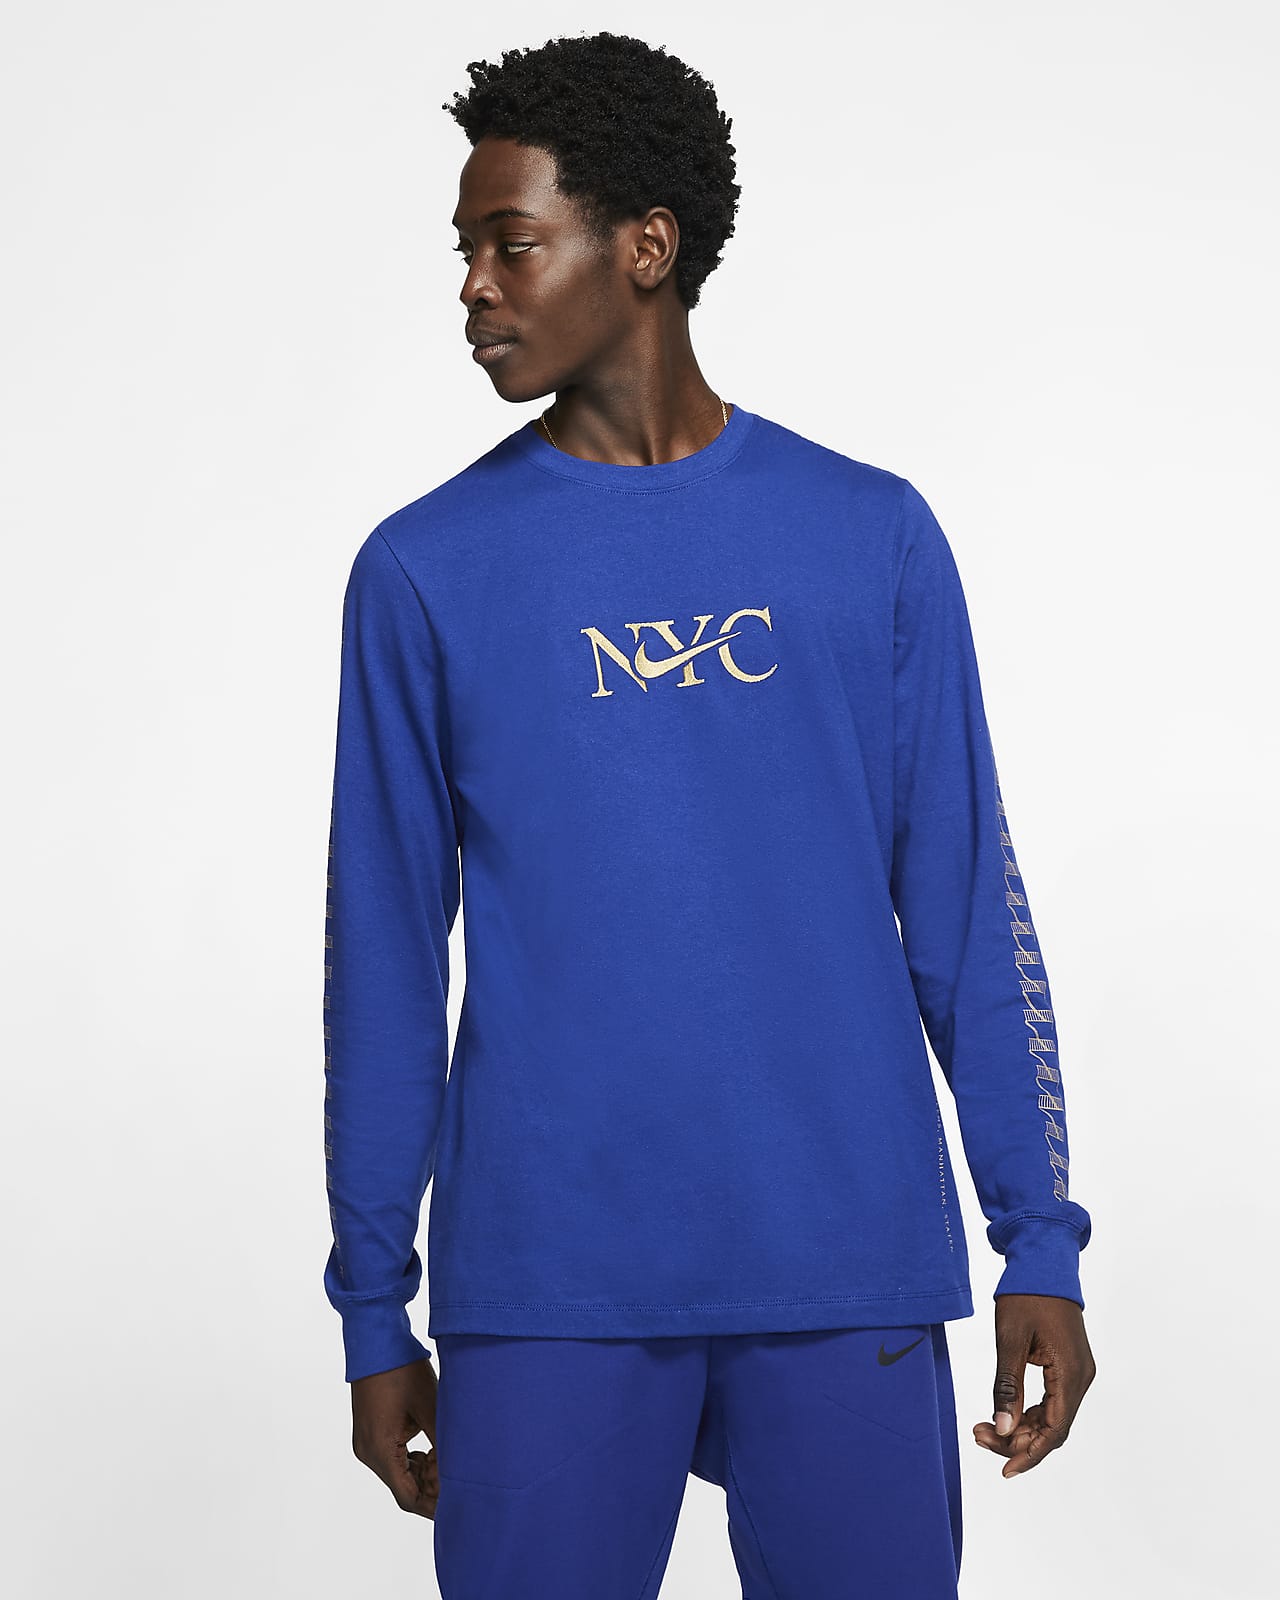 JYC Athletic Long-Sleeve Shirt Yoga T-Shirt Men 